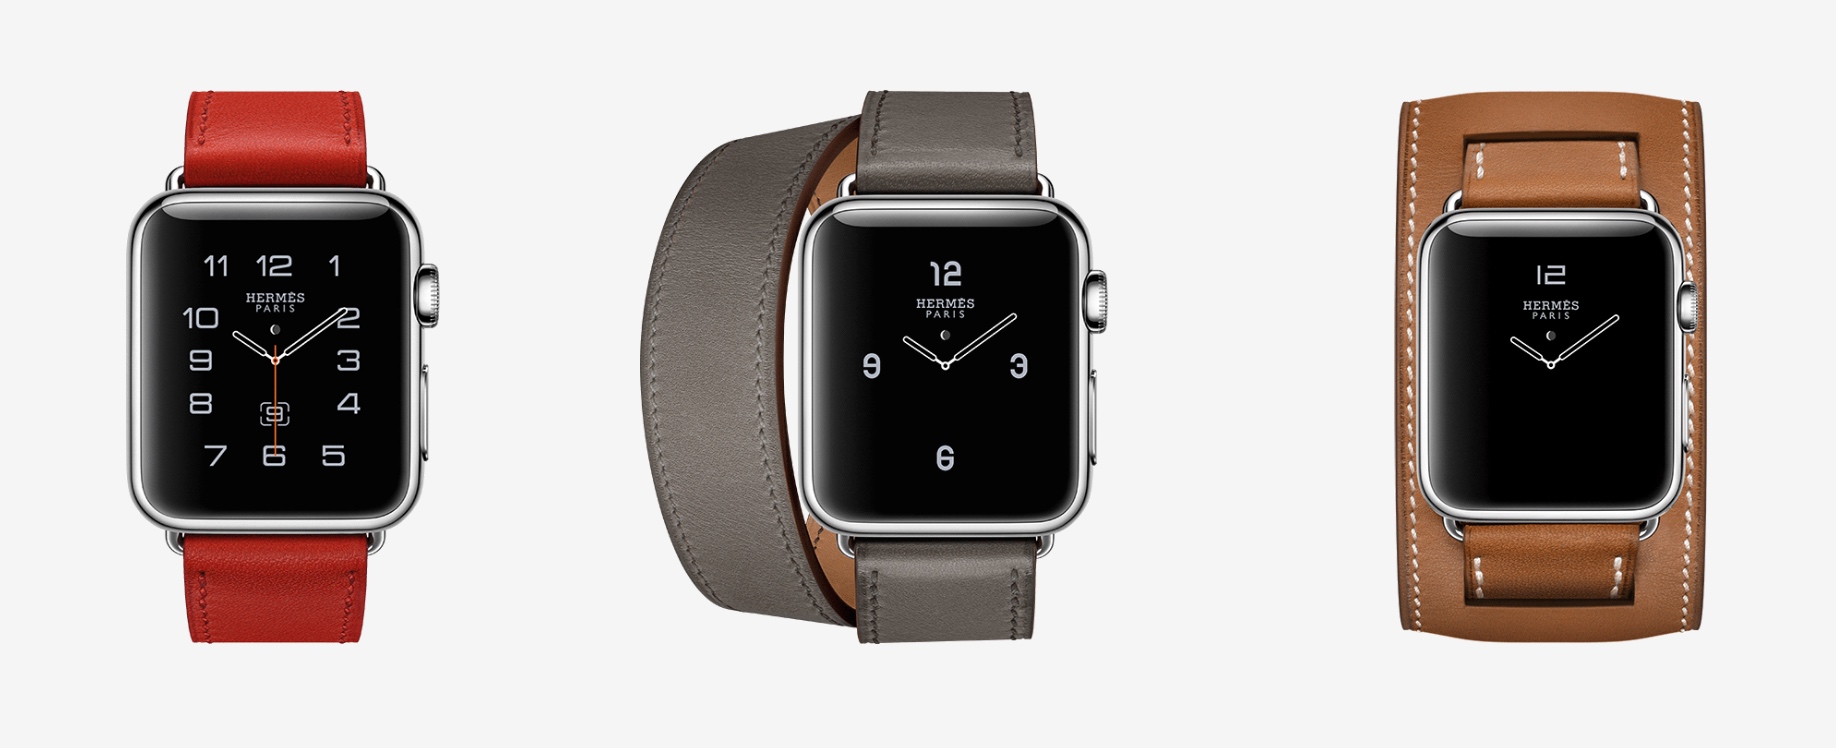 The Hermès Apple Watch: It Starts